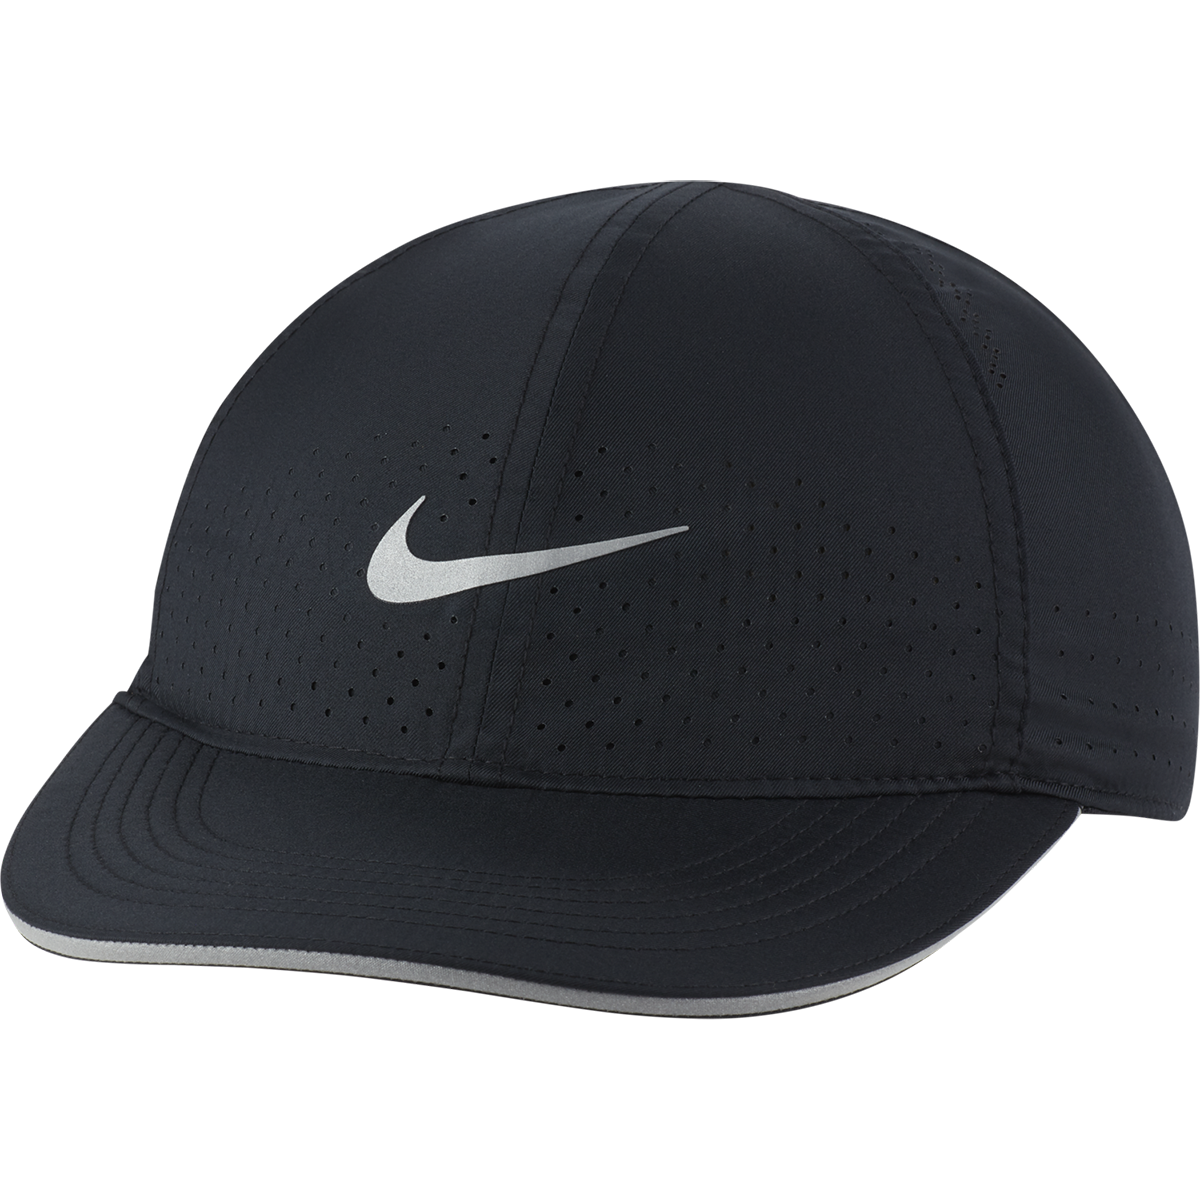 Women's Nike Featherlight Cap